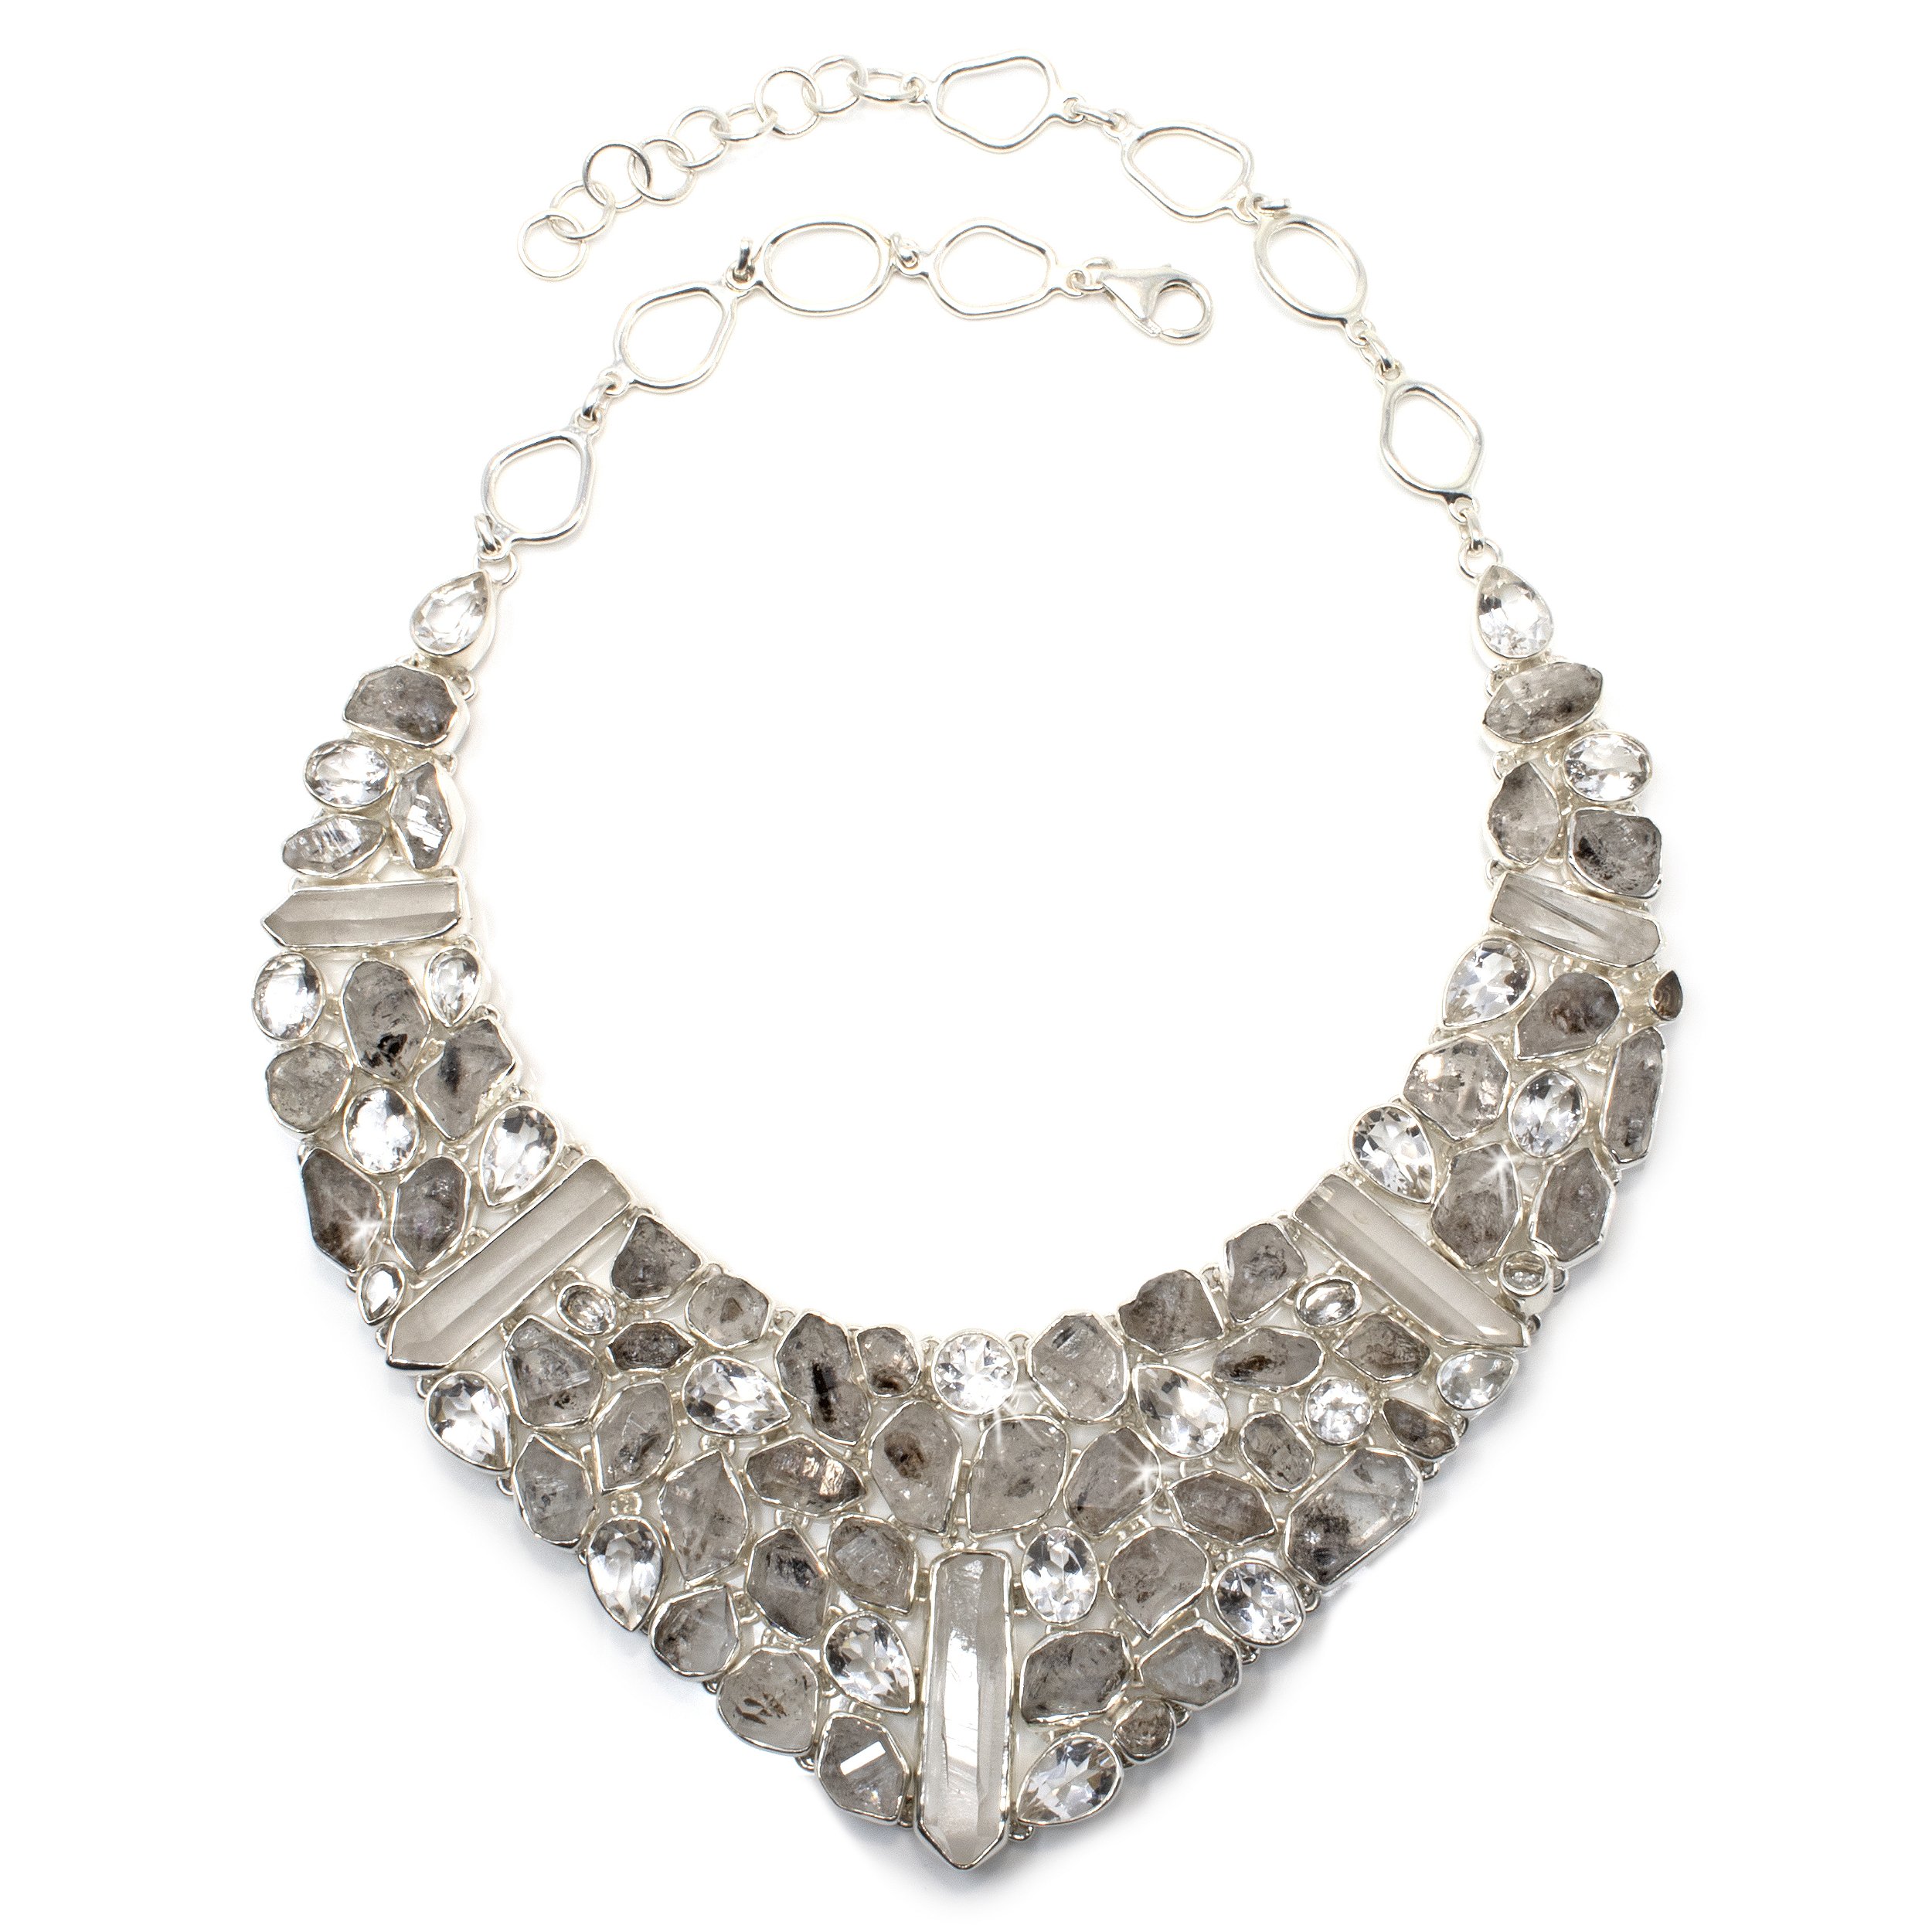 Herkimer Diamond Collar Necklace Set with White Topaz & Quartz Crystals